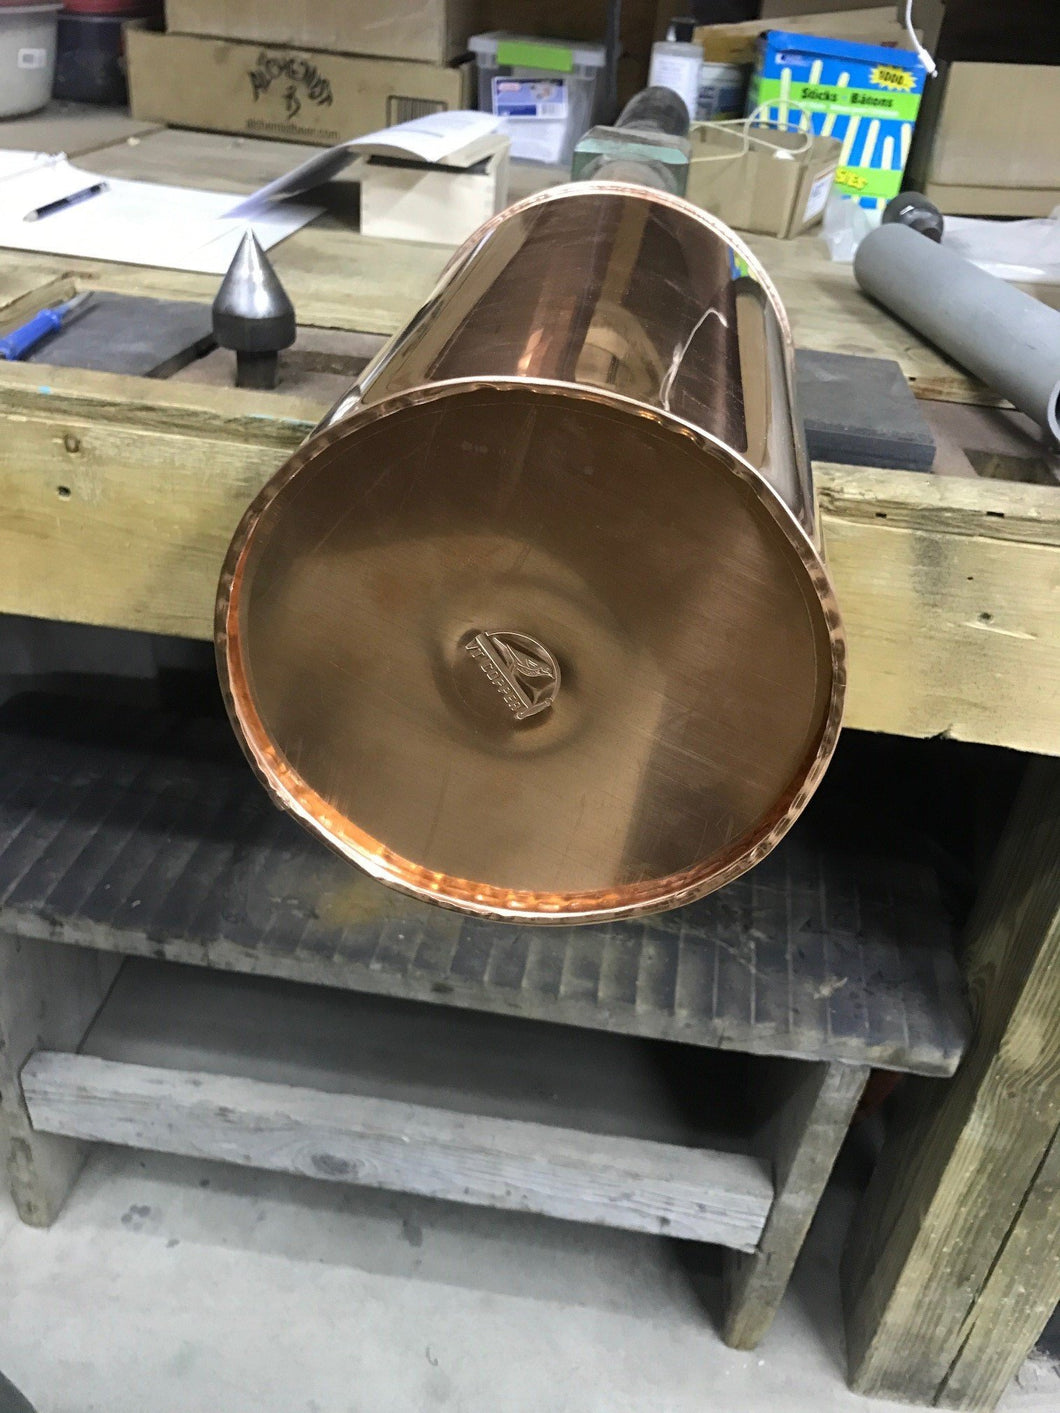 VT Copper Bucket